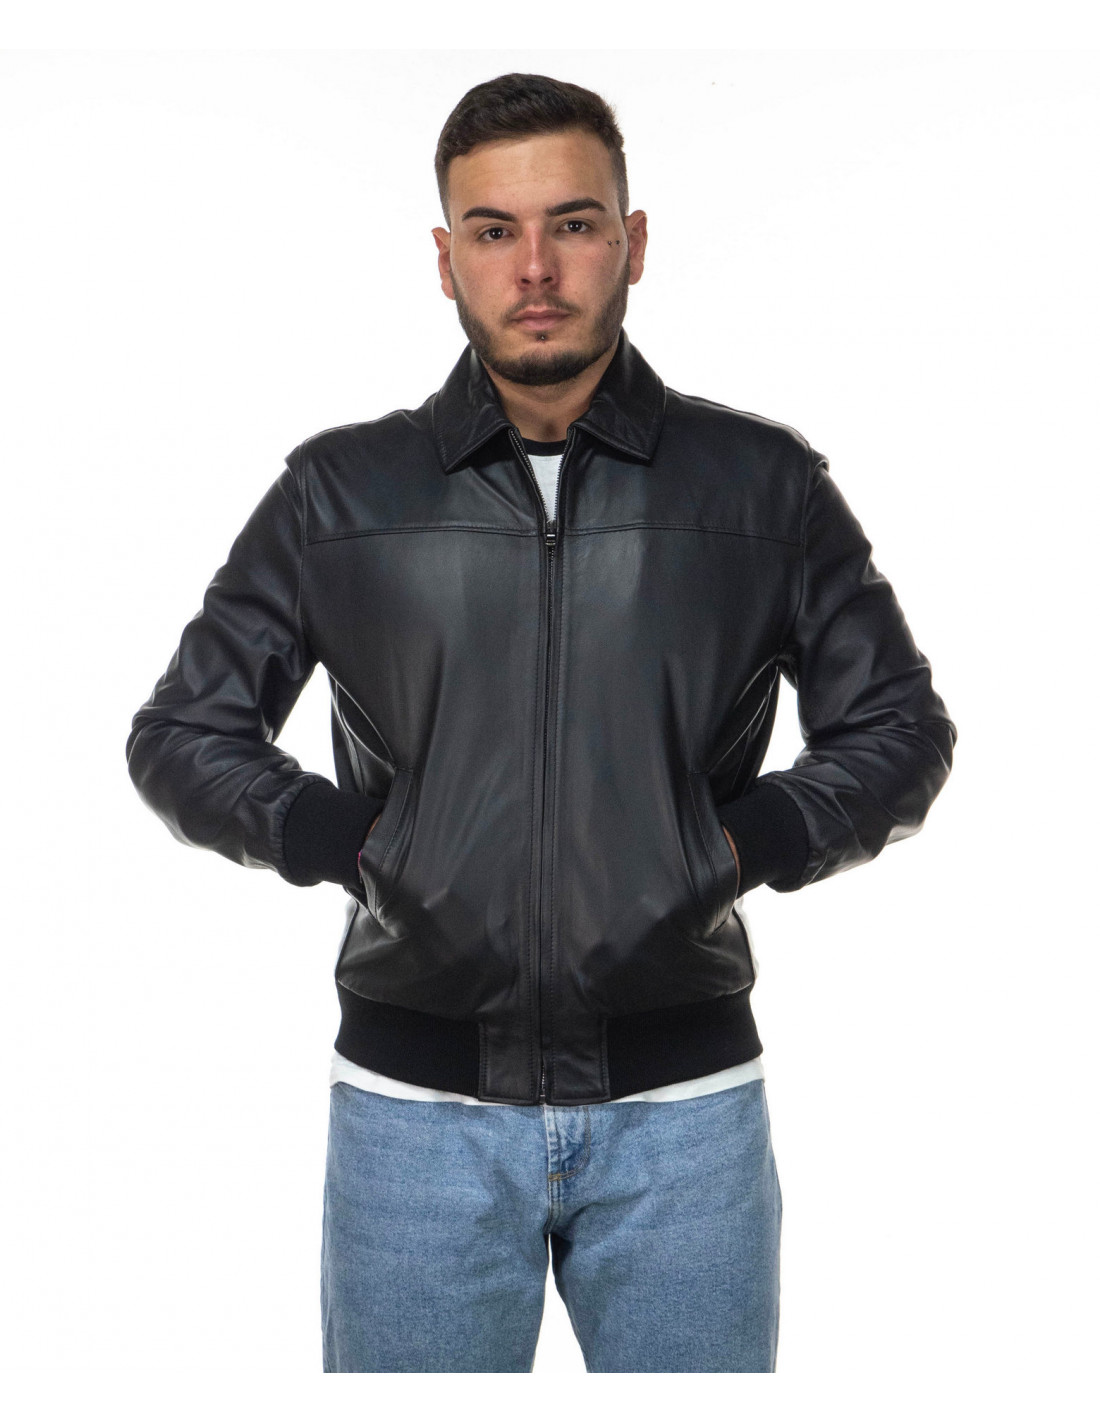 Men's bomber jacket in genuine black leather 100% made in Italy